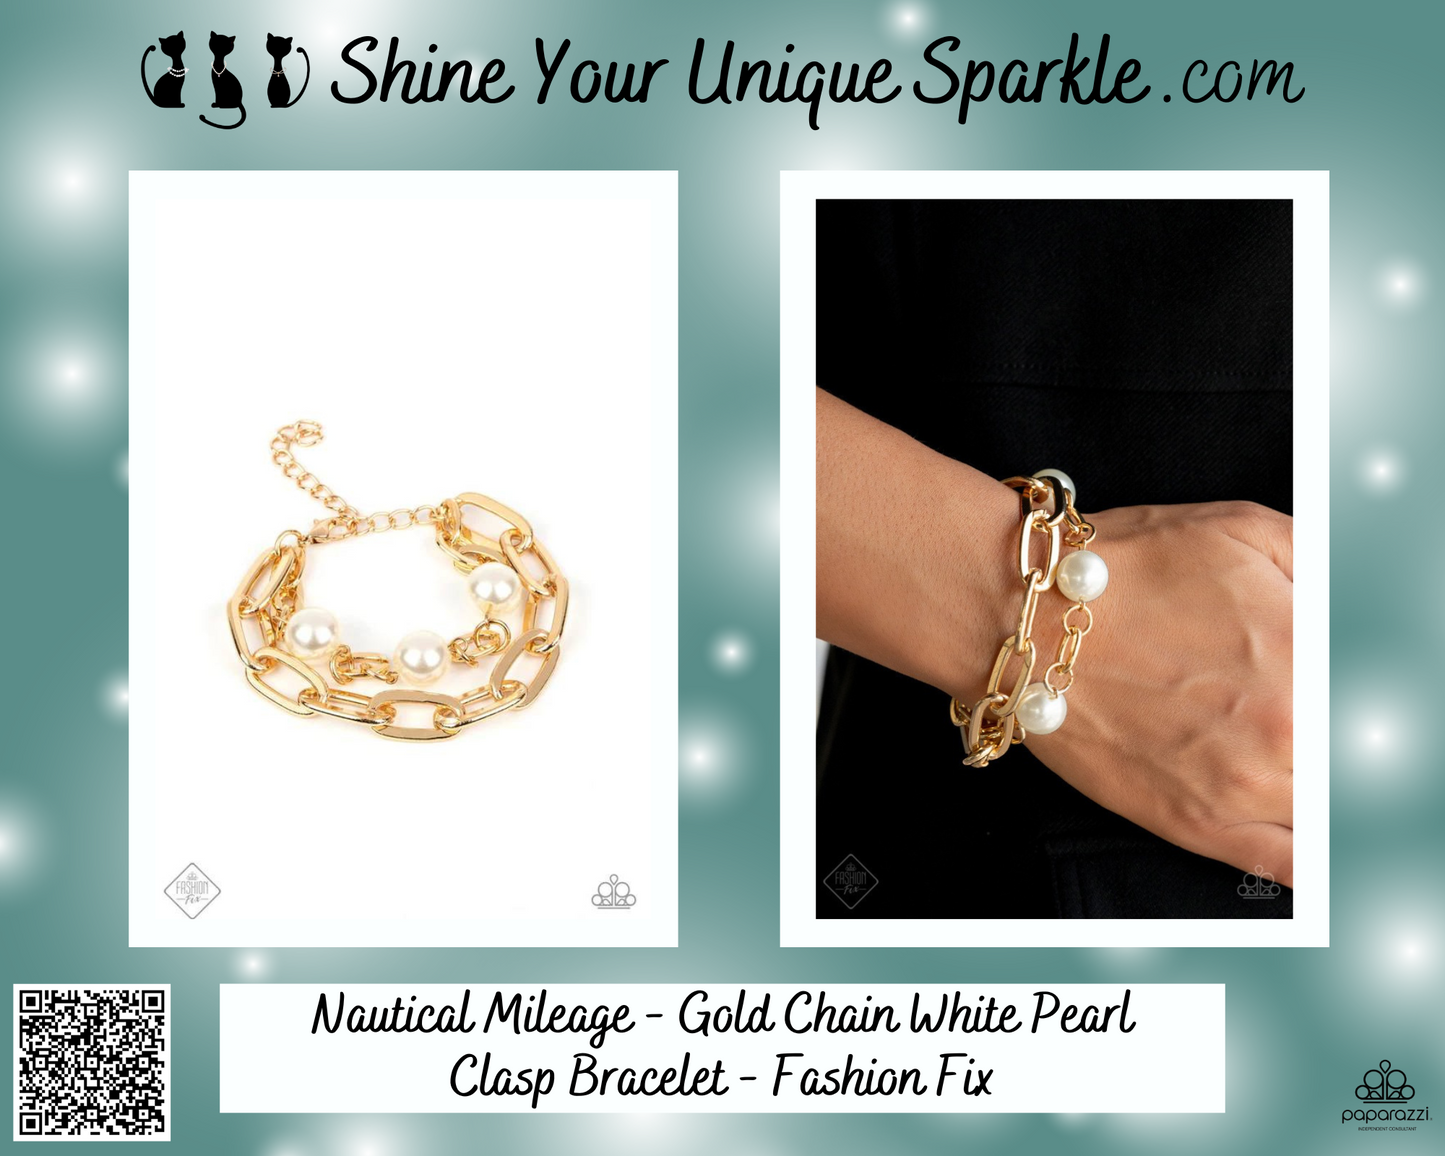 Nautical Mileage - Gold Chain White Pearl Clasp Bracelet - Fashion Fix